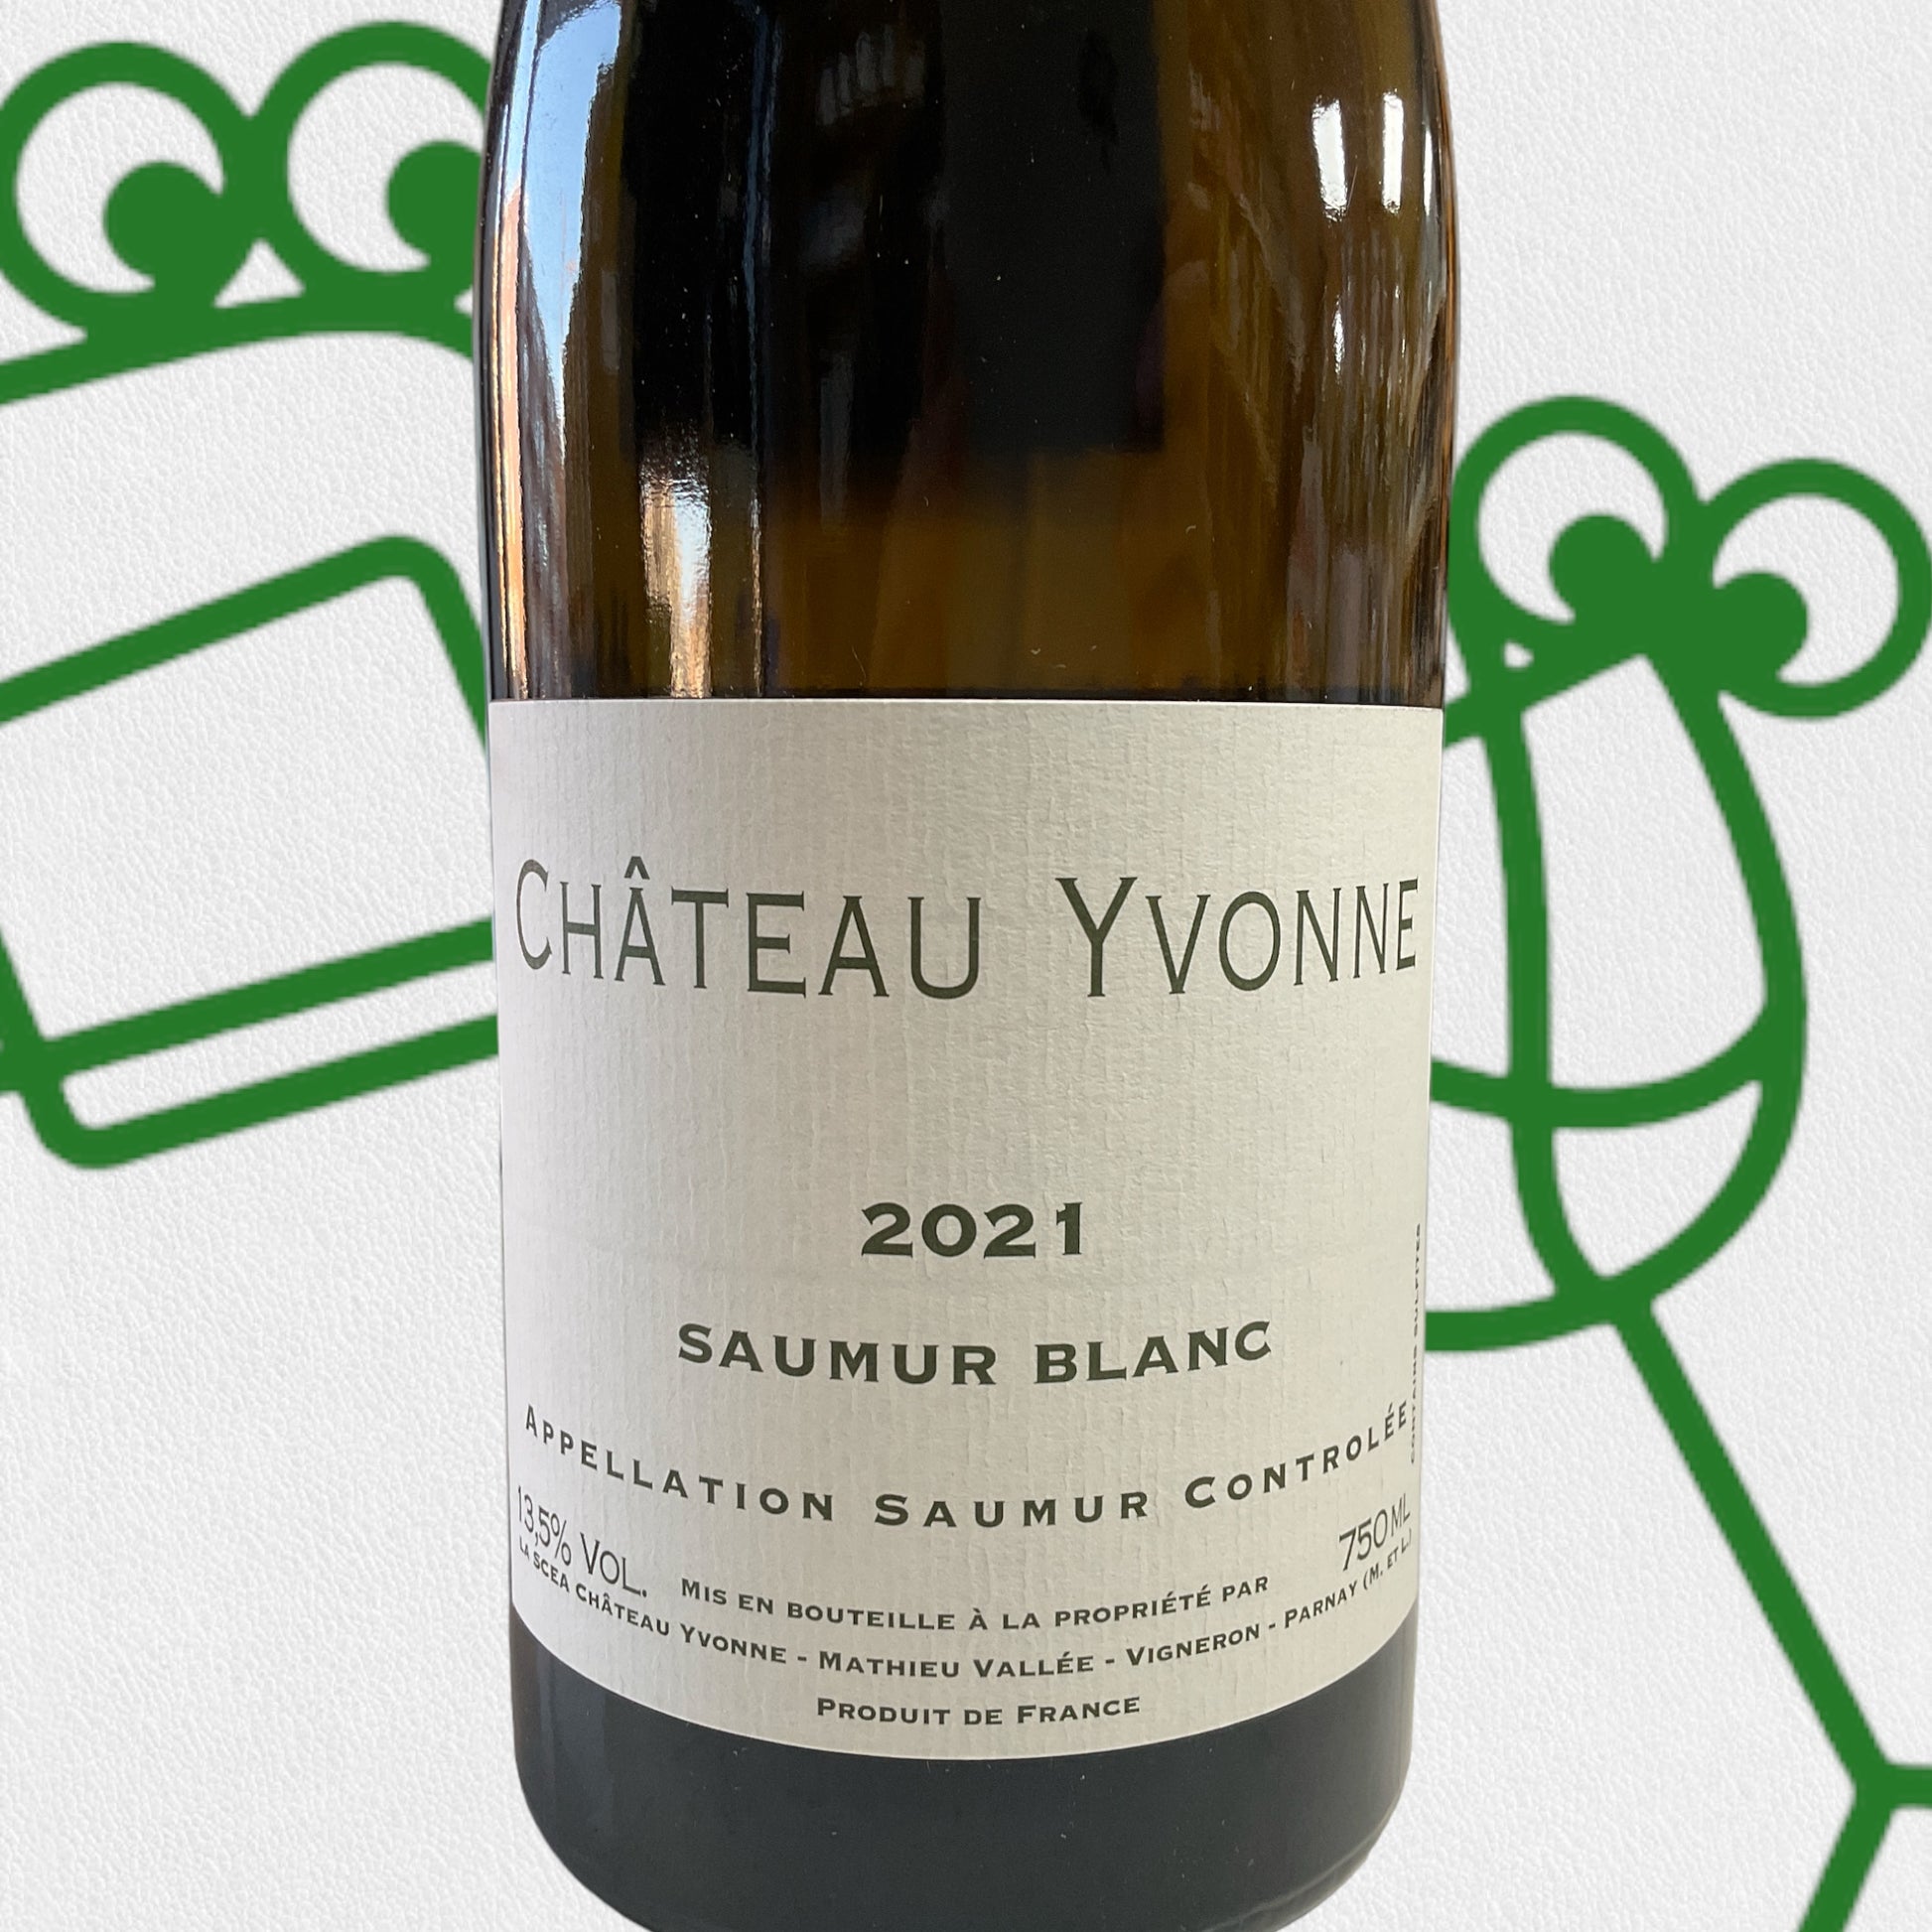 Chateau Yvonne Saumur Blanc 2021 Loire Valley, France - Williston Park Wines & Spirits